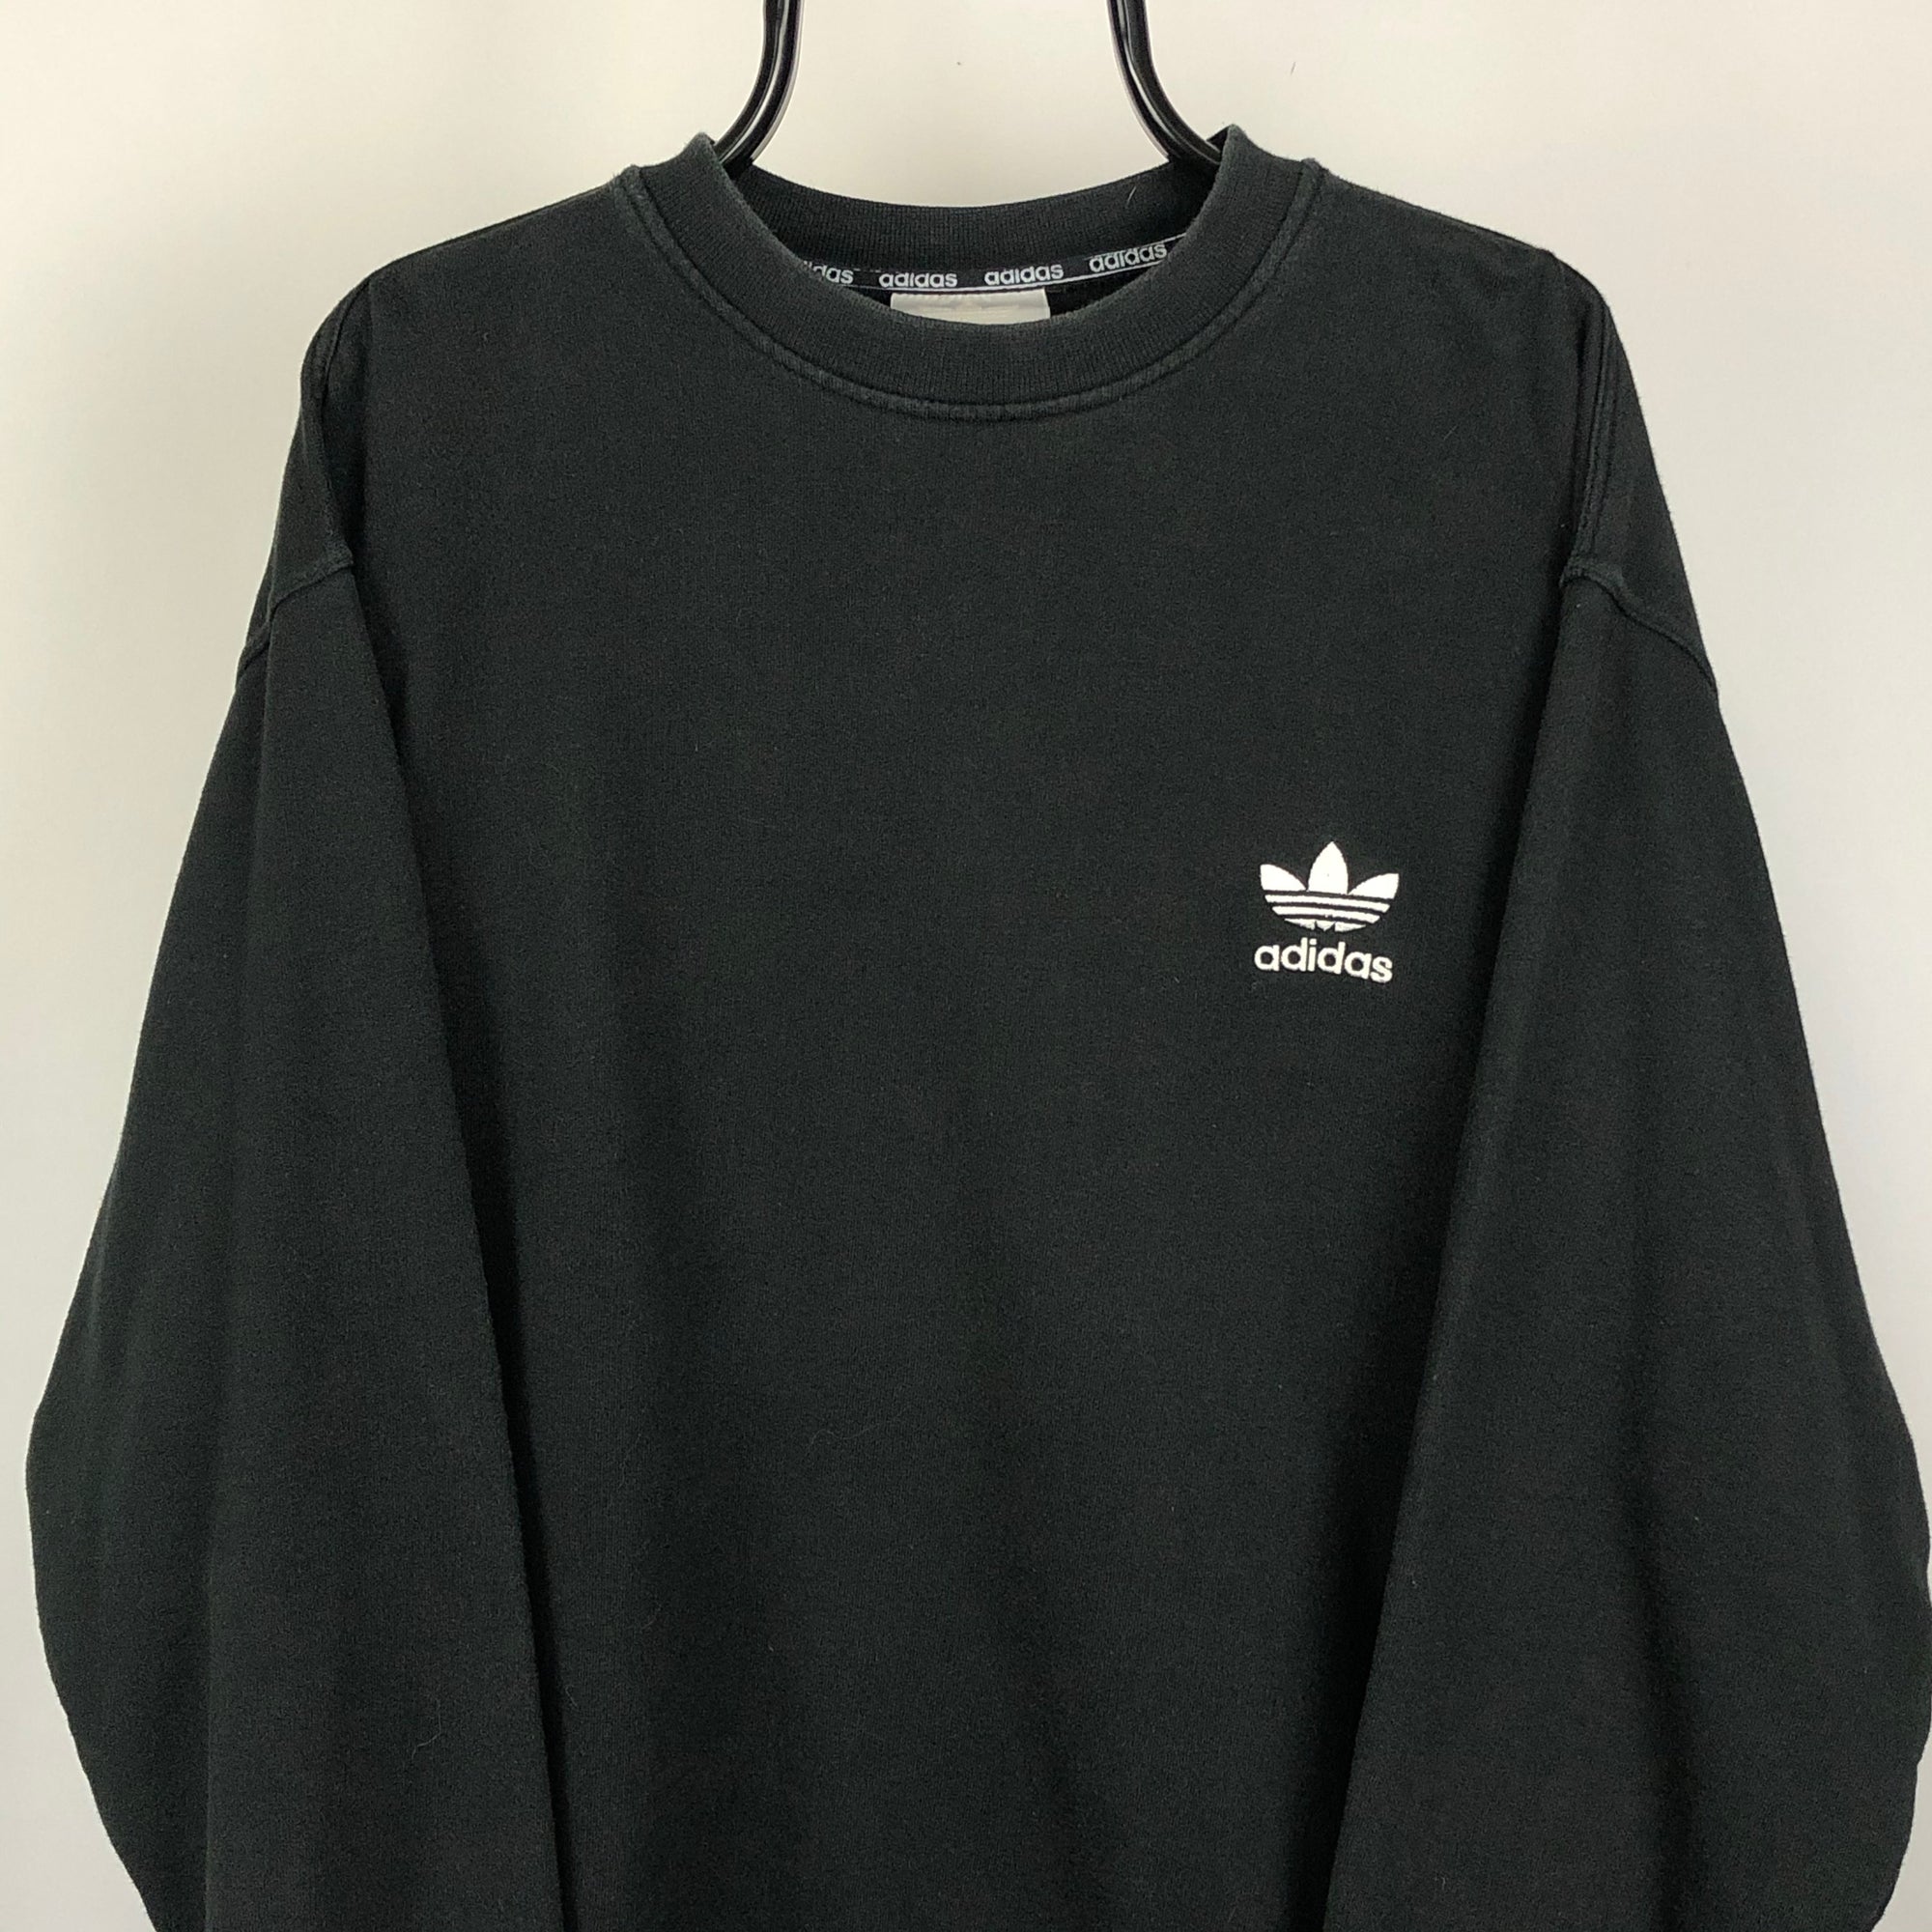 Vintage Adidas Small Logo Sweatshirt in Black - Men’s Large/Women’s XL